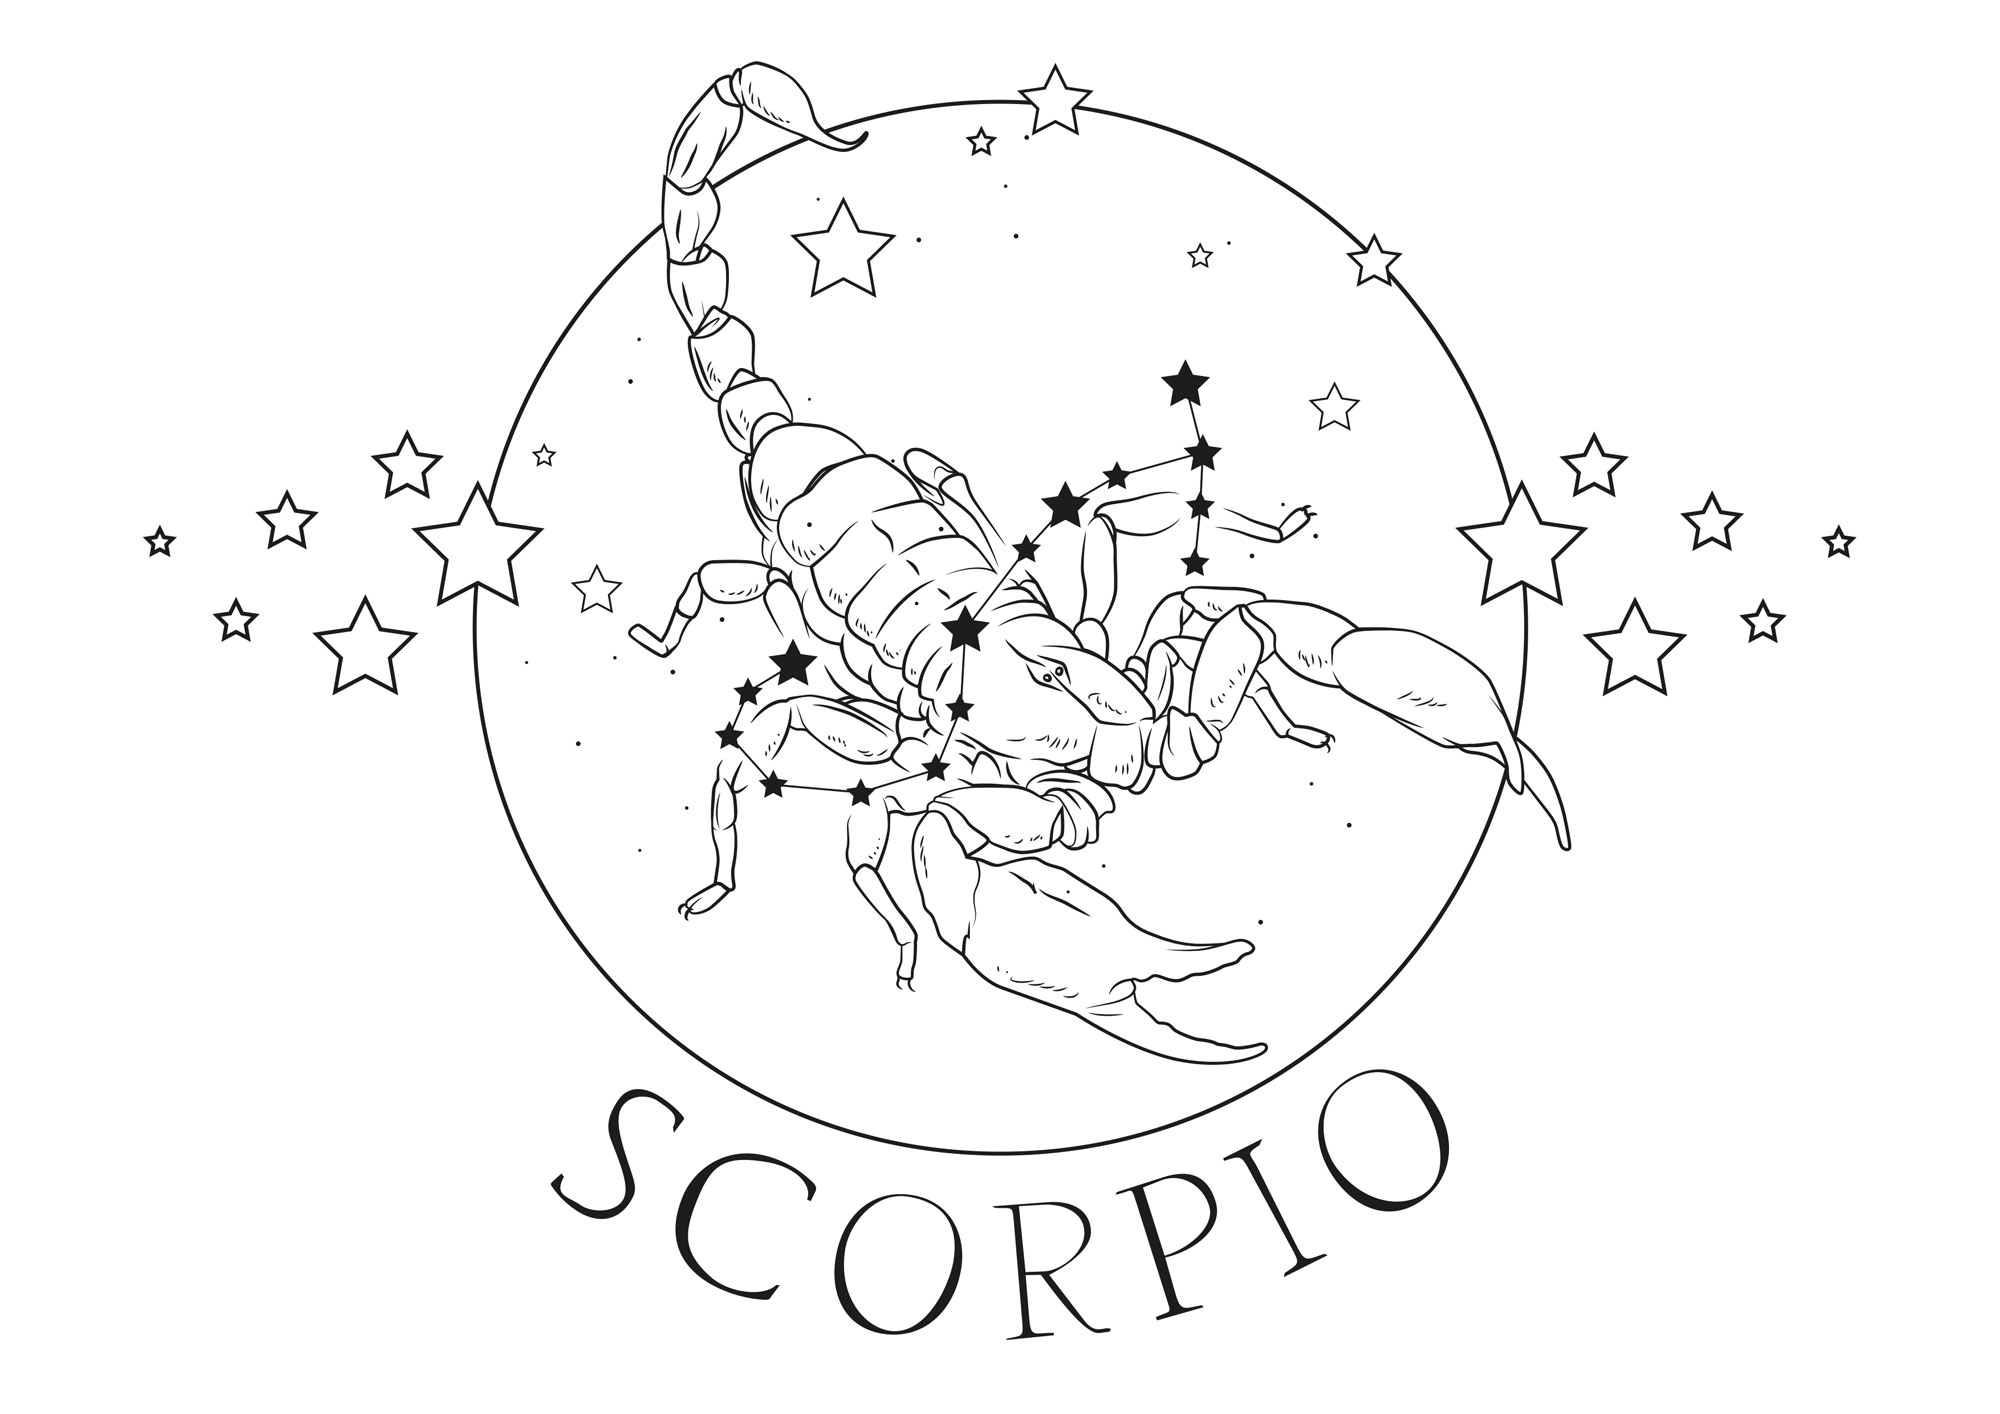 skorpion_znak_zodiaku